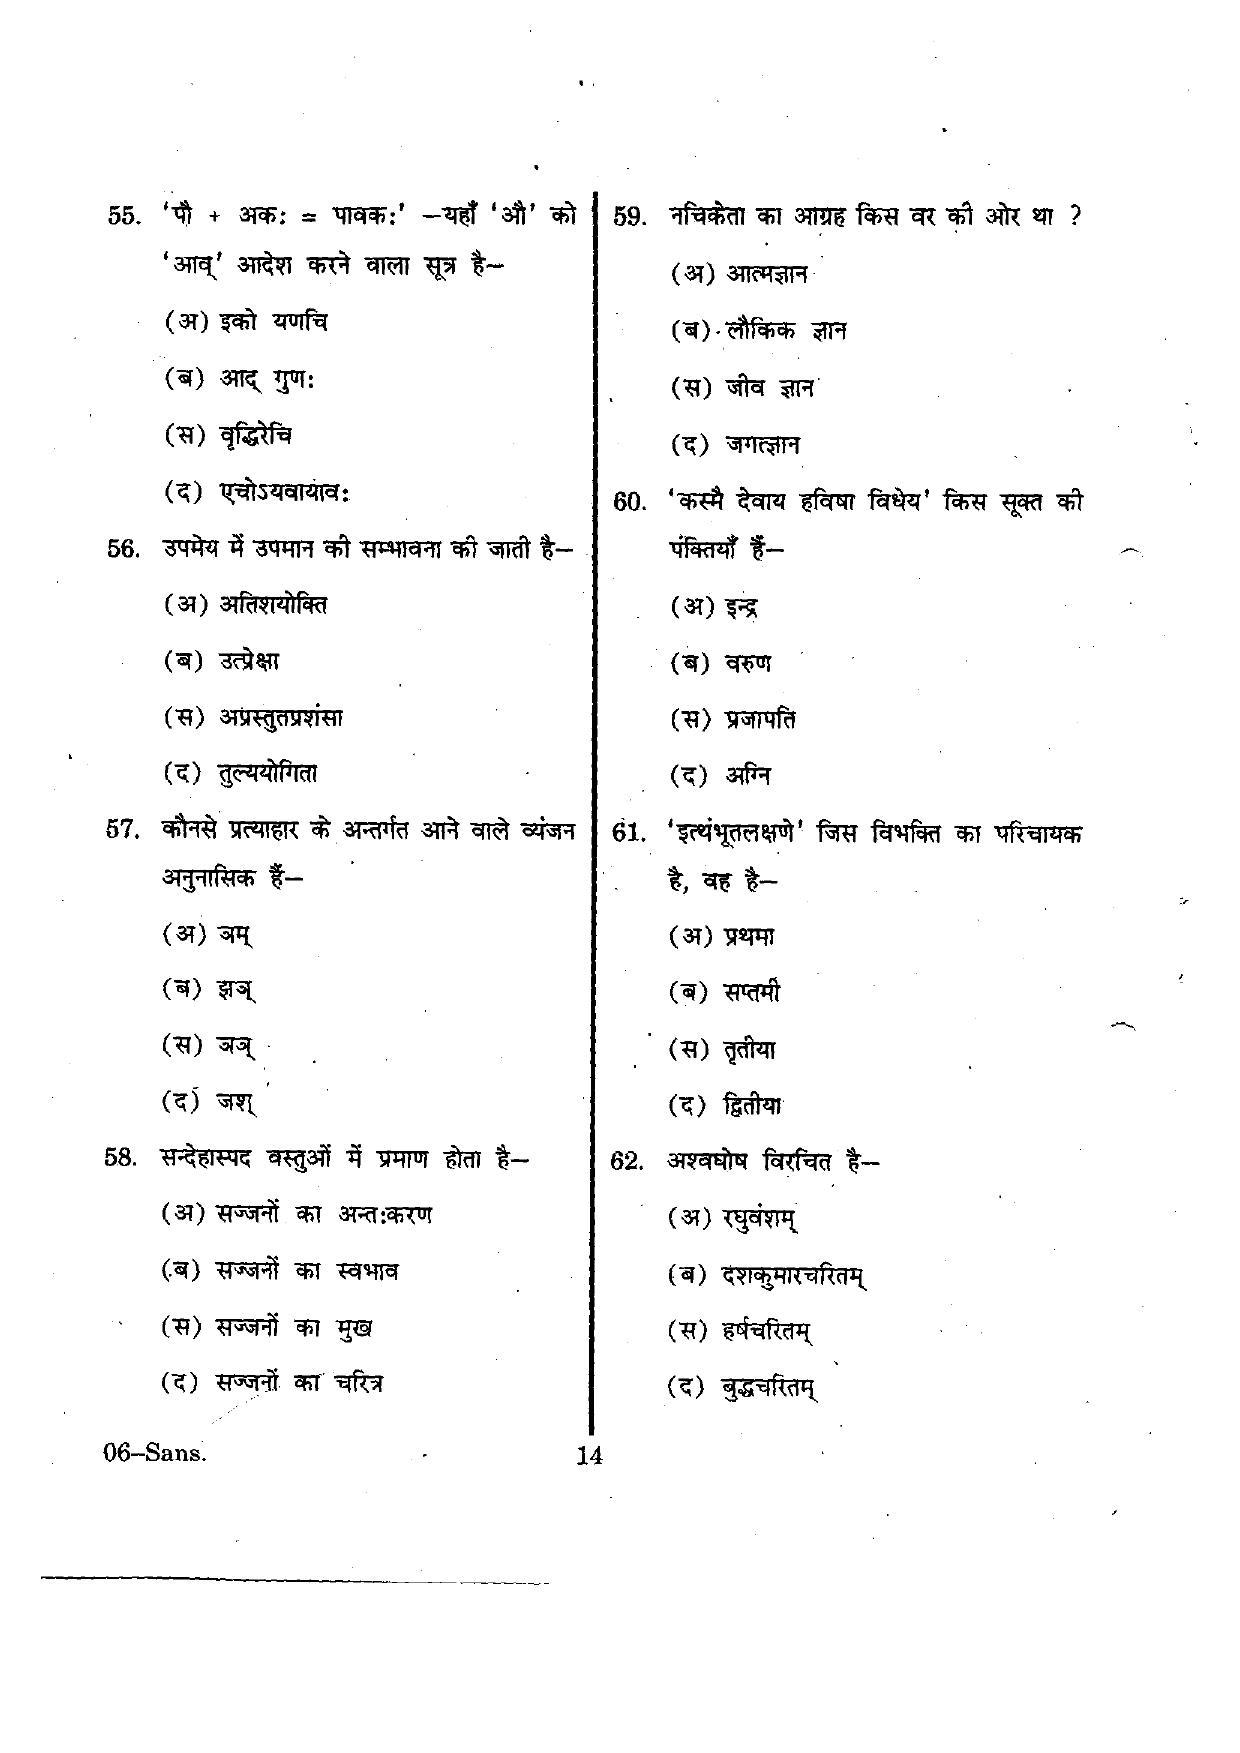 URATPG Sanskrit 2012 Question Paper - Page 14